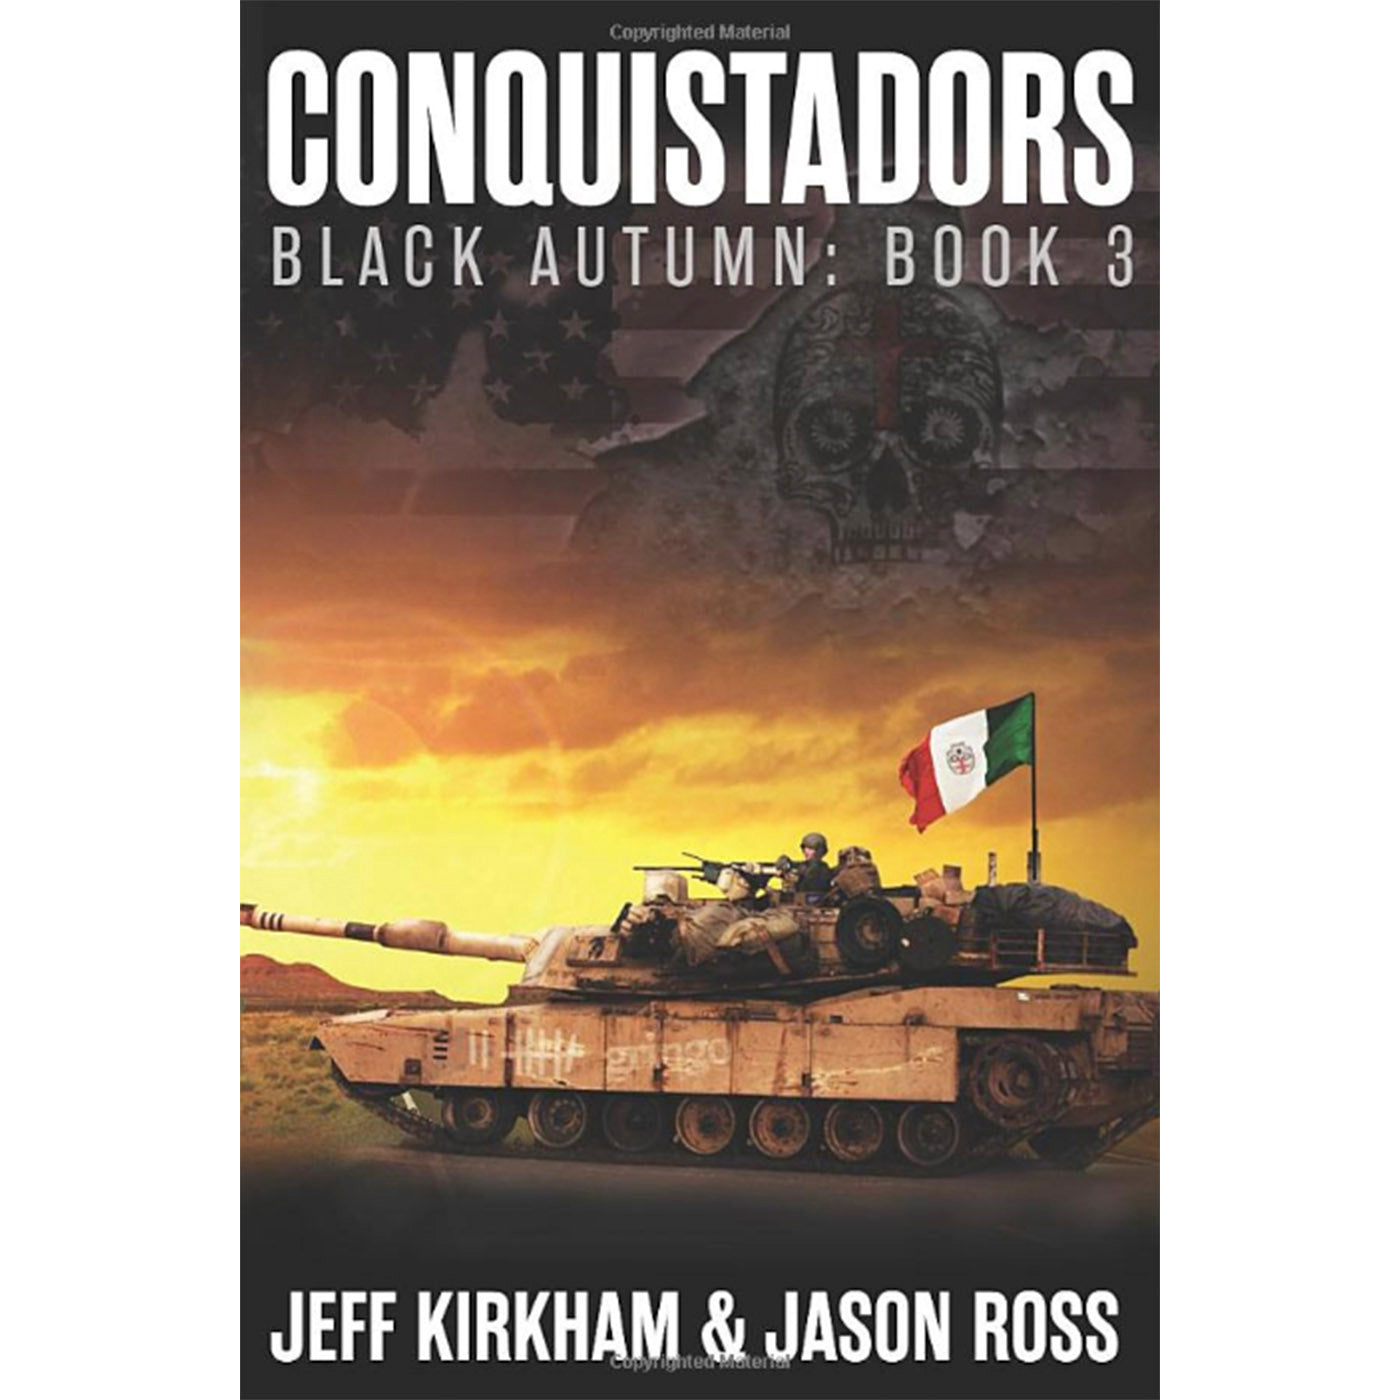 Conquistadors (The Black Autumn Series Book 3)